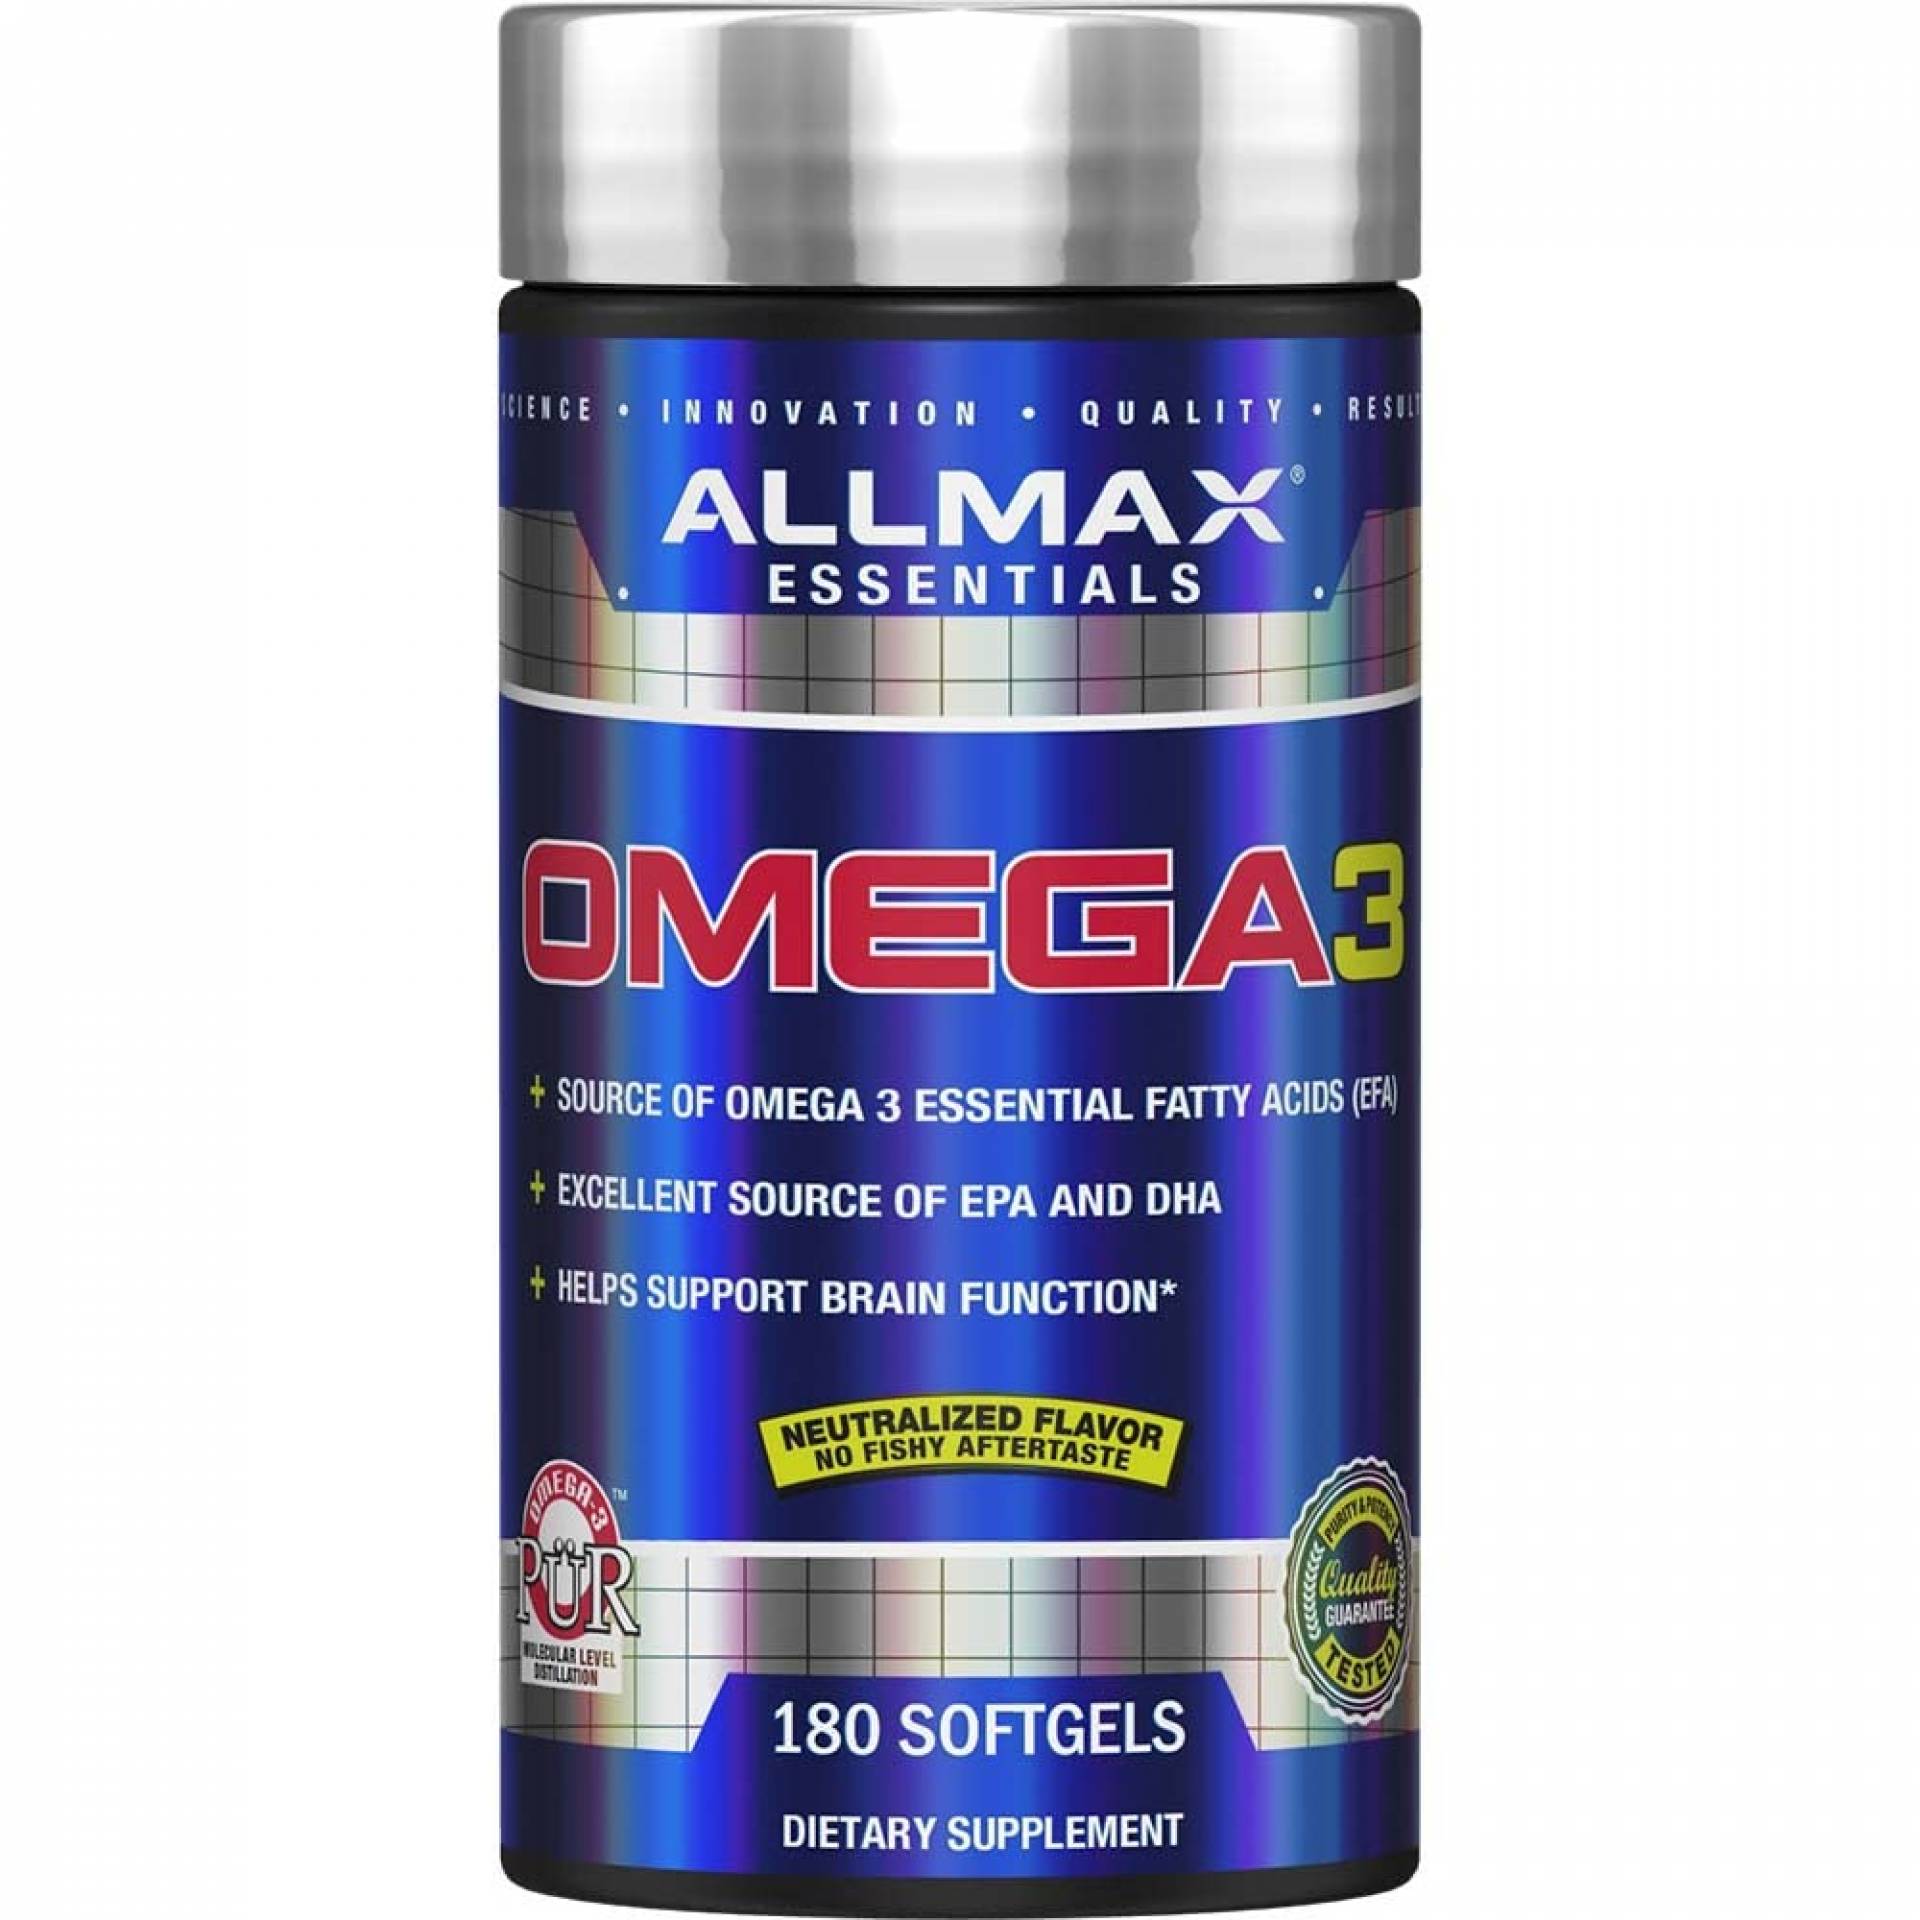 Allmax Omega-3 Capsules - $17.99